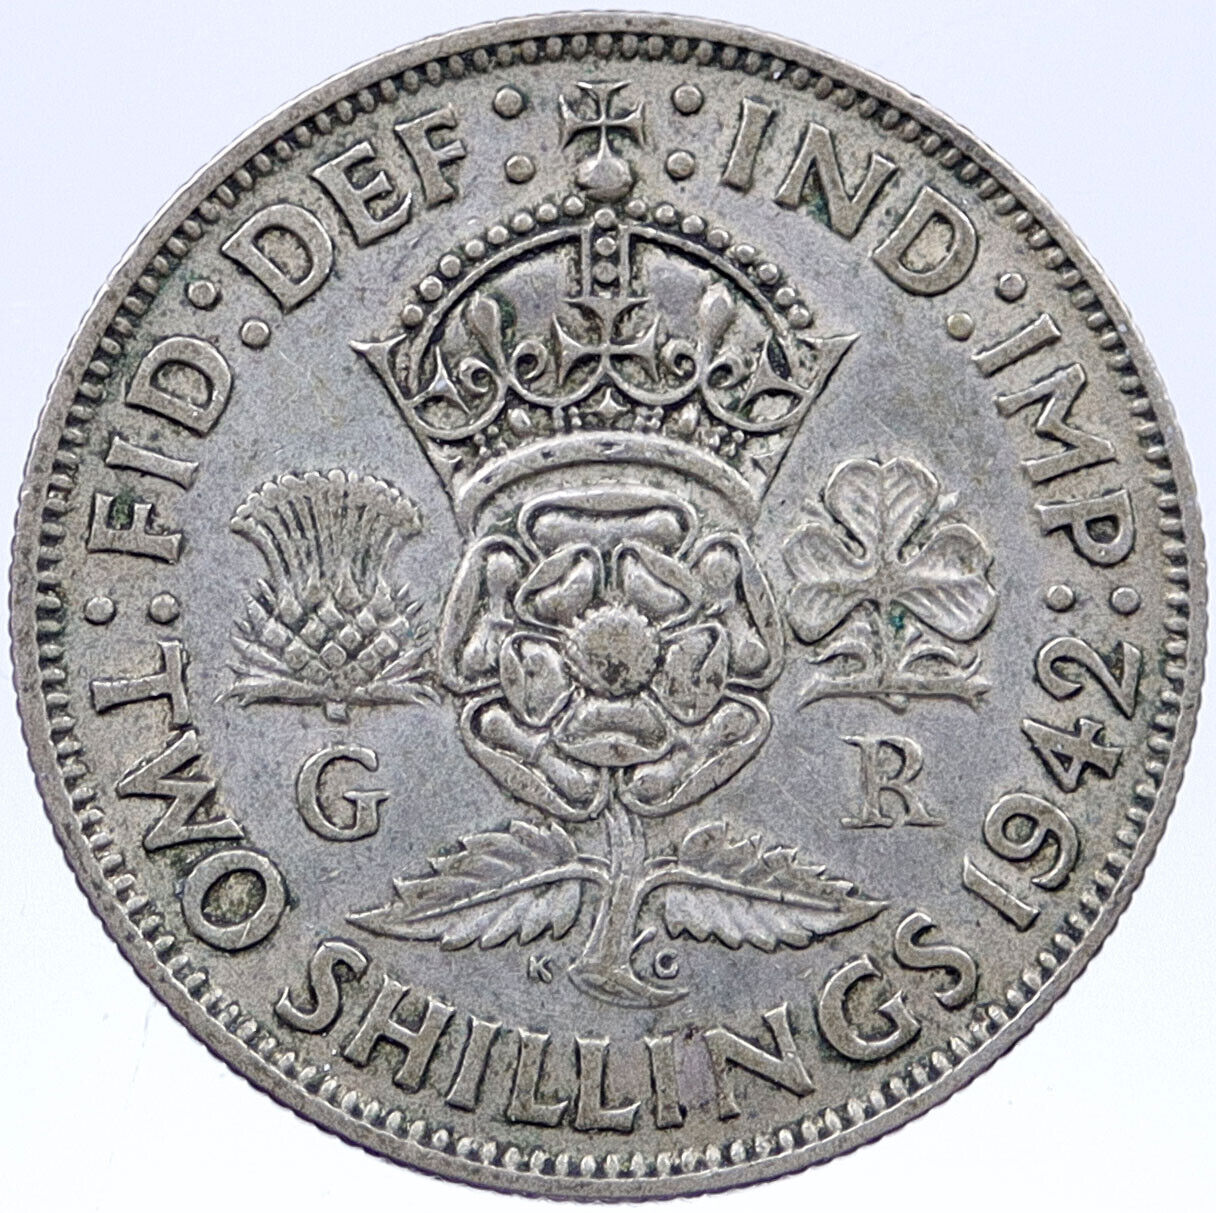 1942 Great Britain United Kingdom King George VI SILVER 2 SHILLING Coin i118799